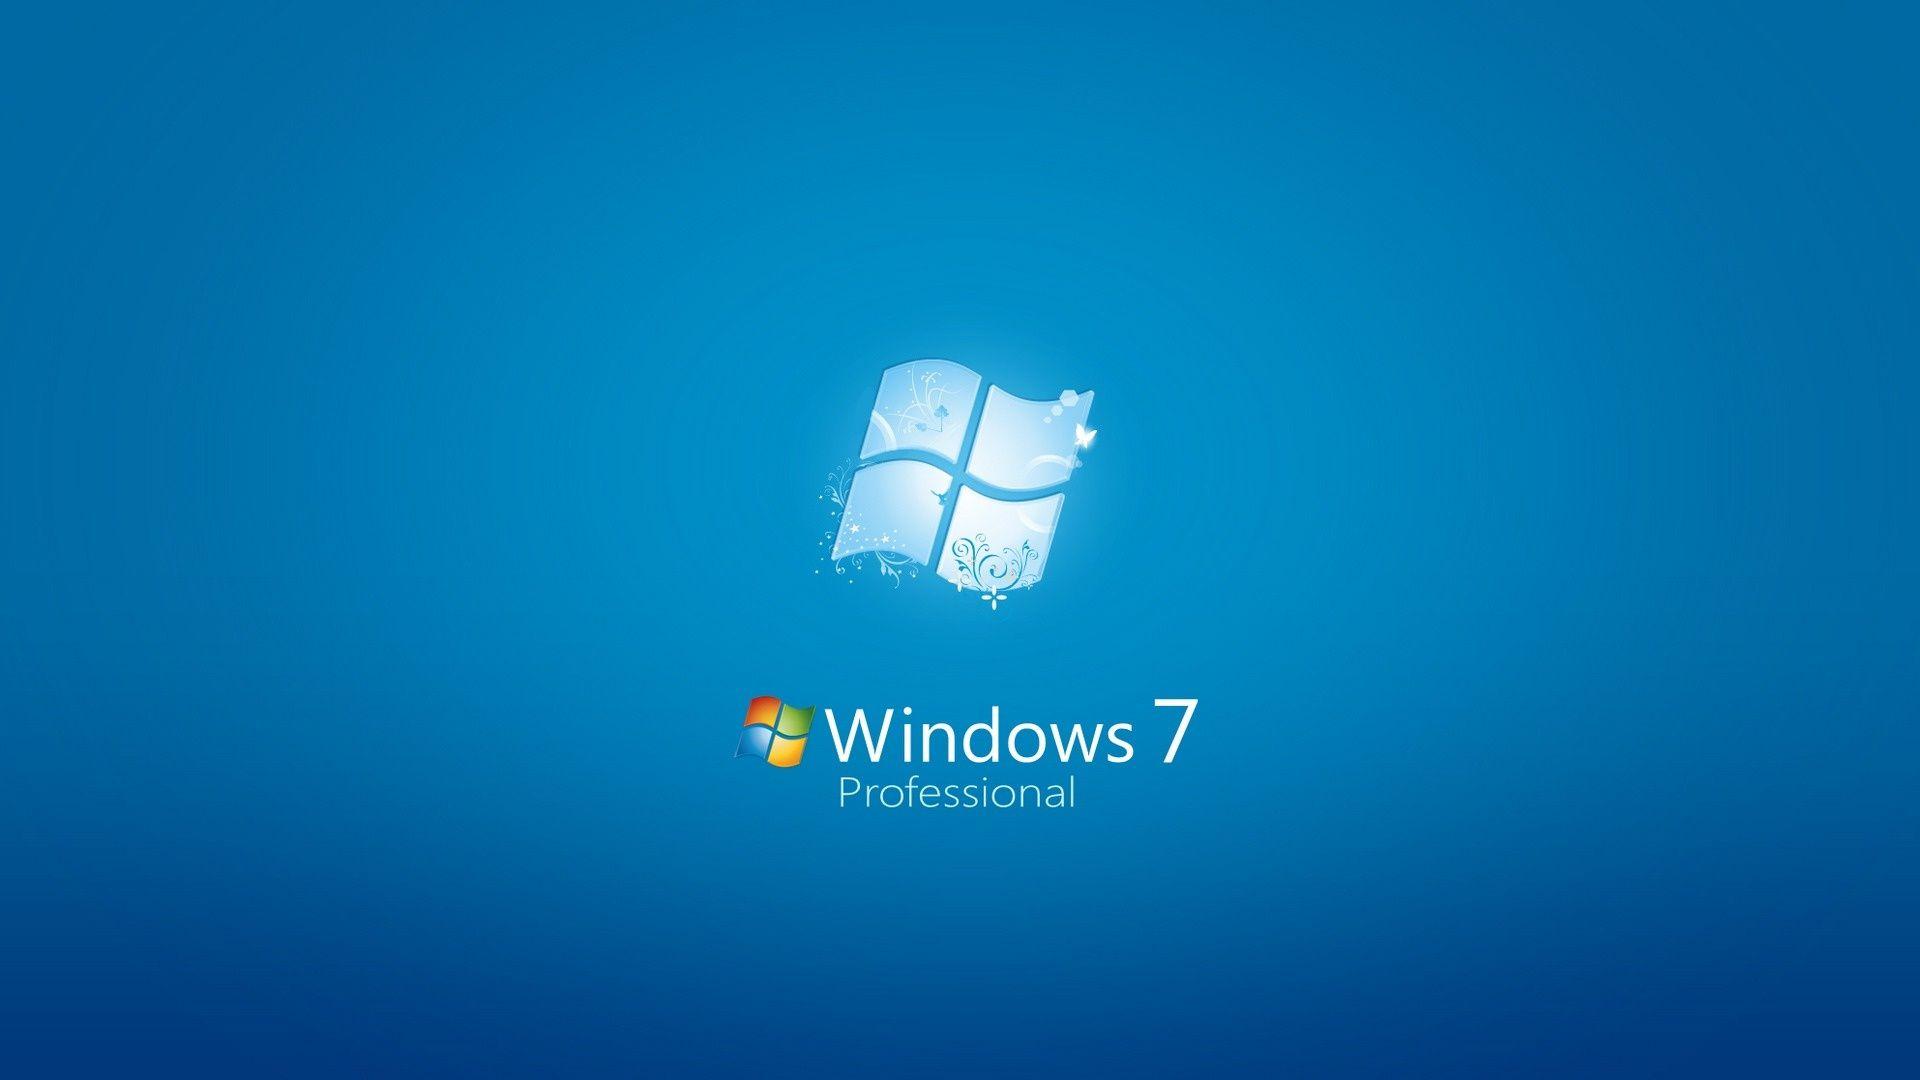 Starting Windows 7 Wallpaper Background Wallpaper